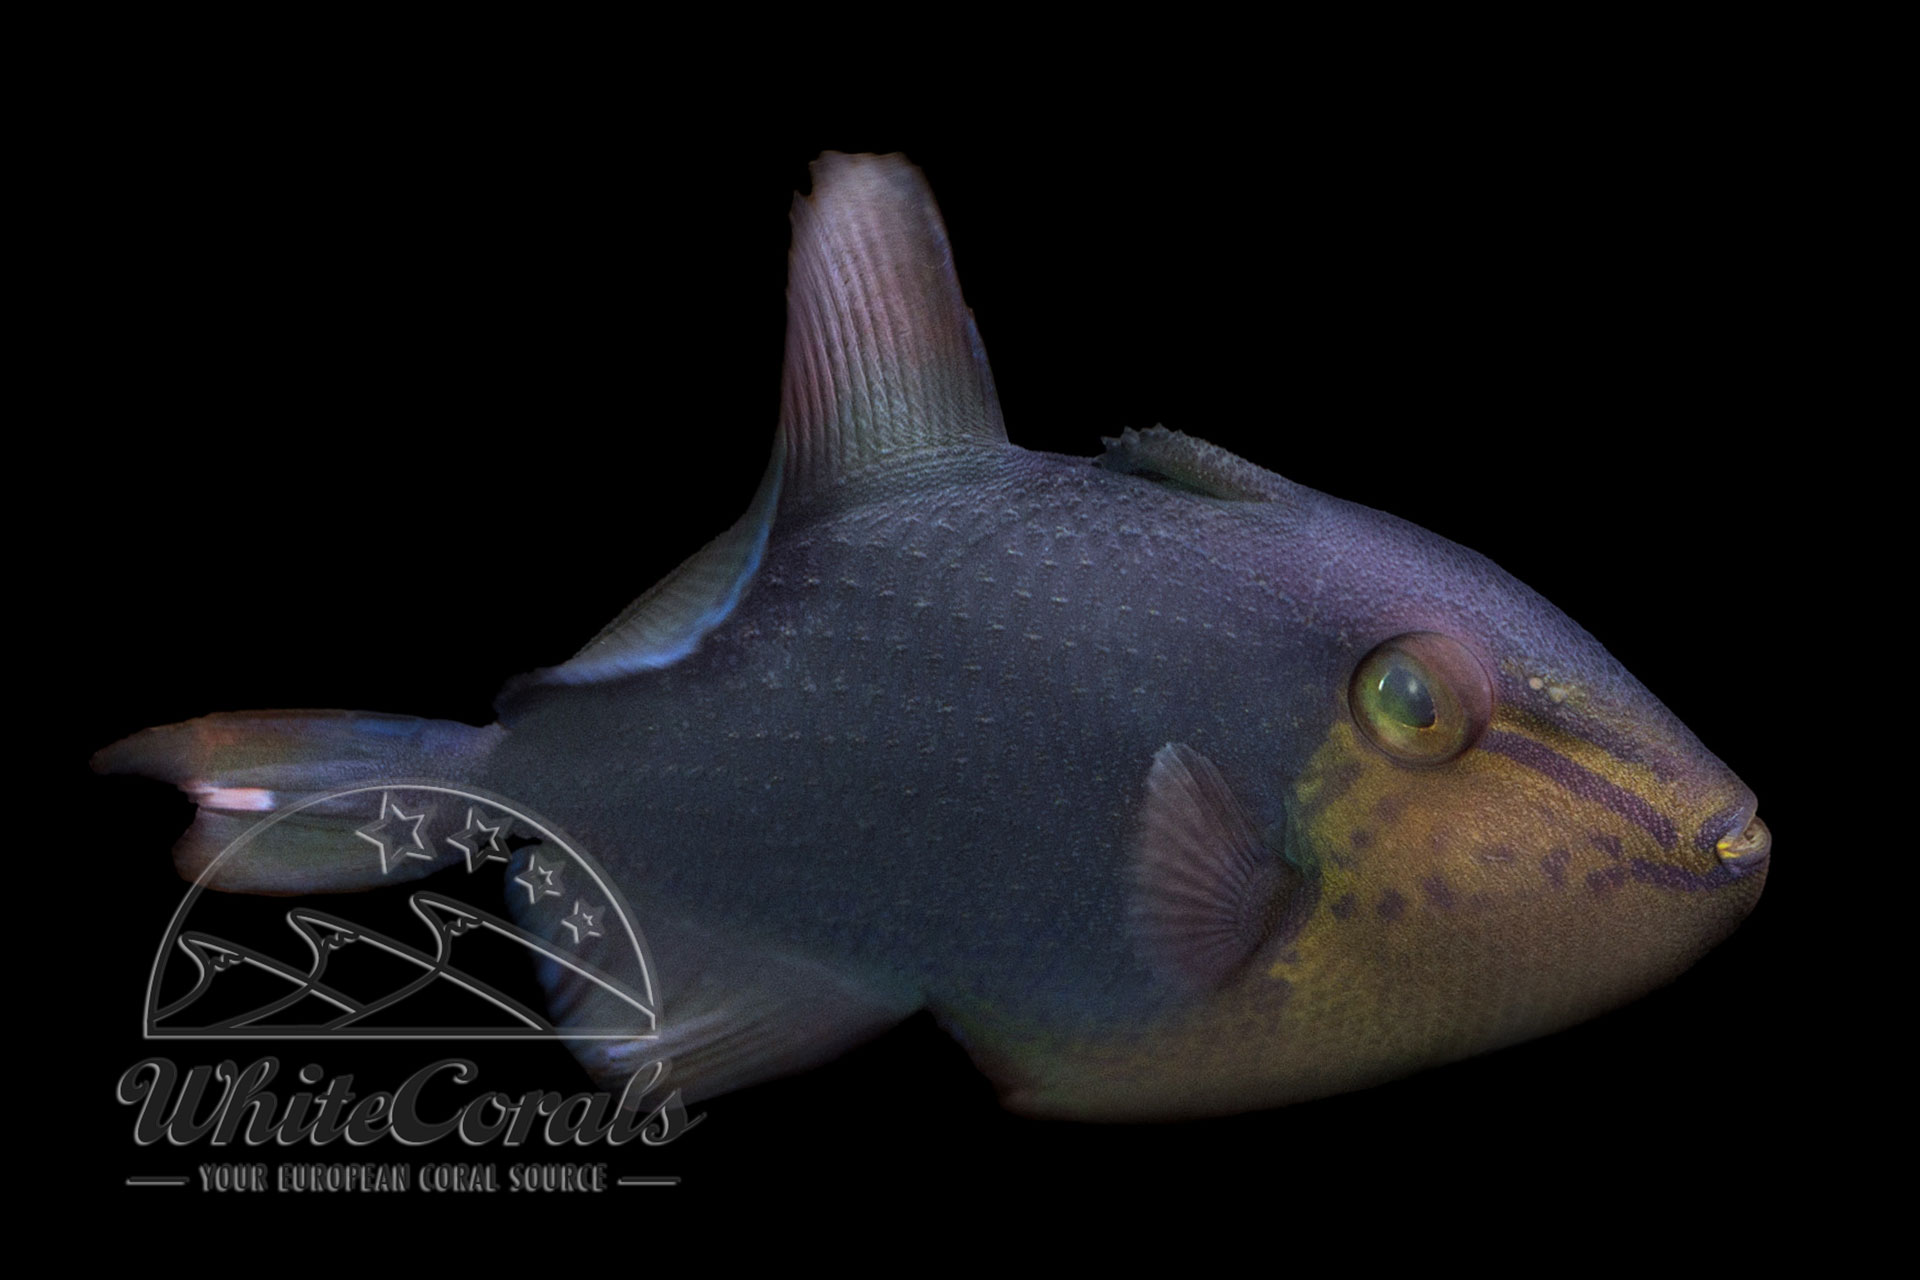 Odonus niger - Redtoothed triggerfish